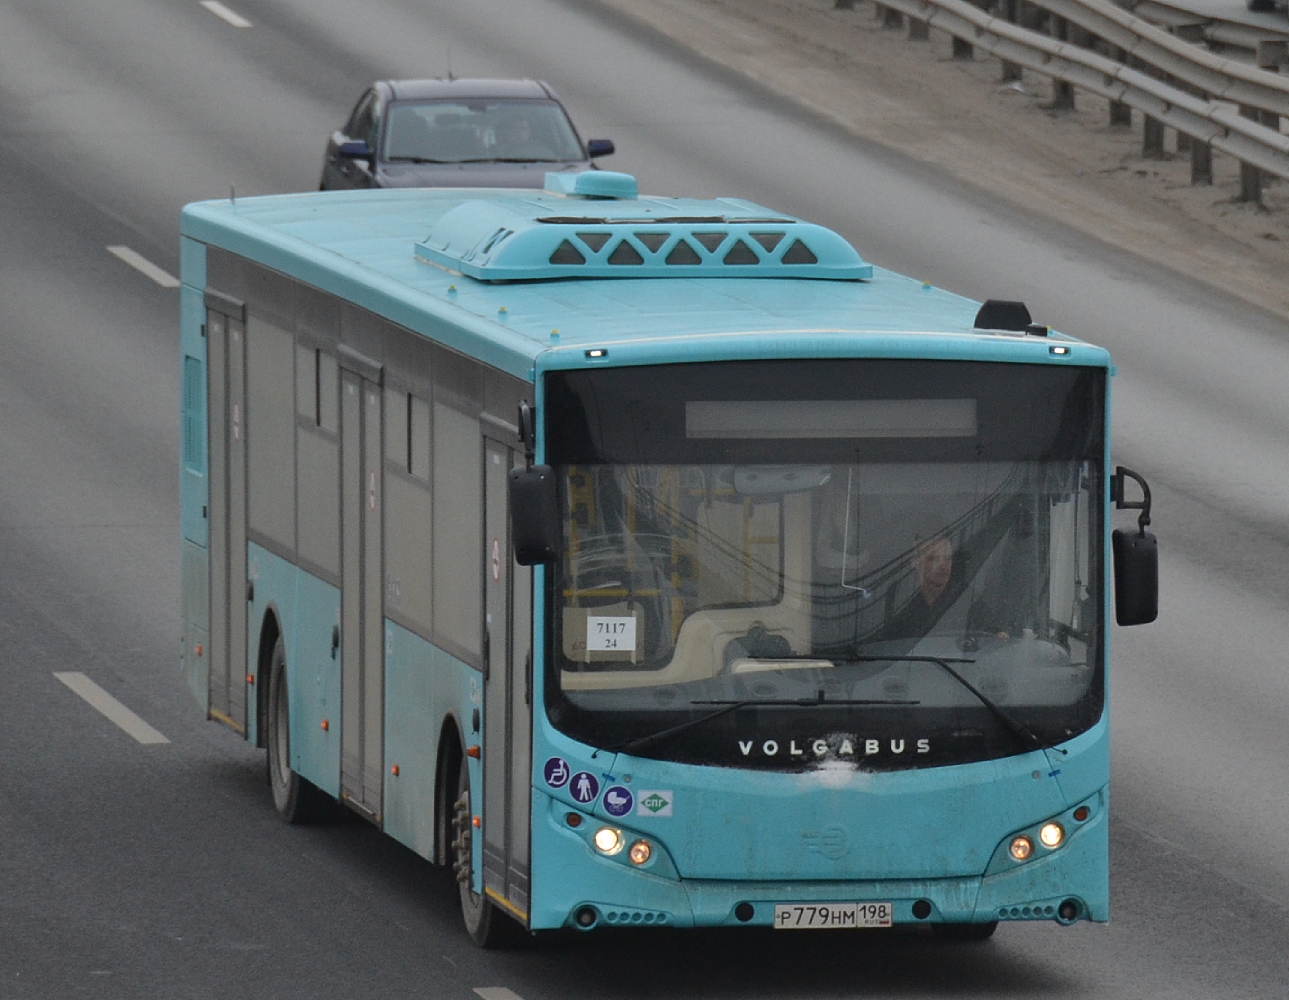 Санкт-Петербург, Volgabus-5270.G4 (LNG) № 6342